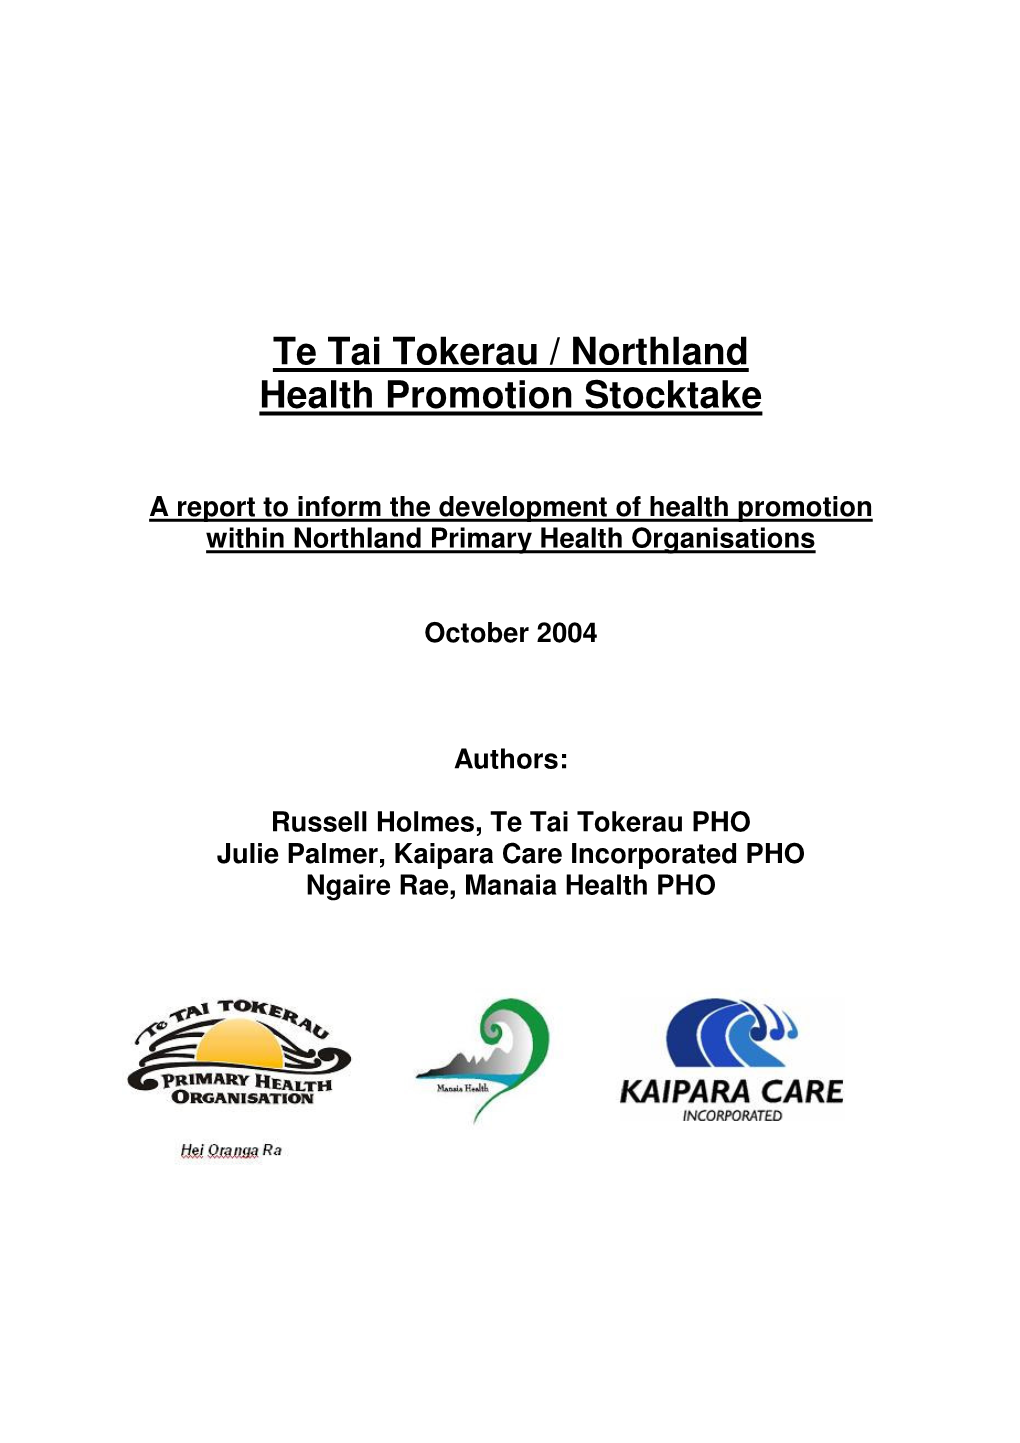 Te Tai Tokerau / Northland Health Promotion Stocktake